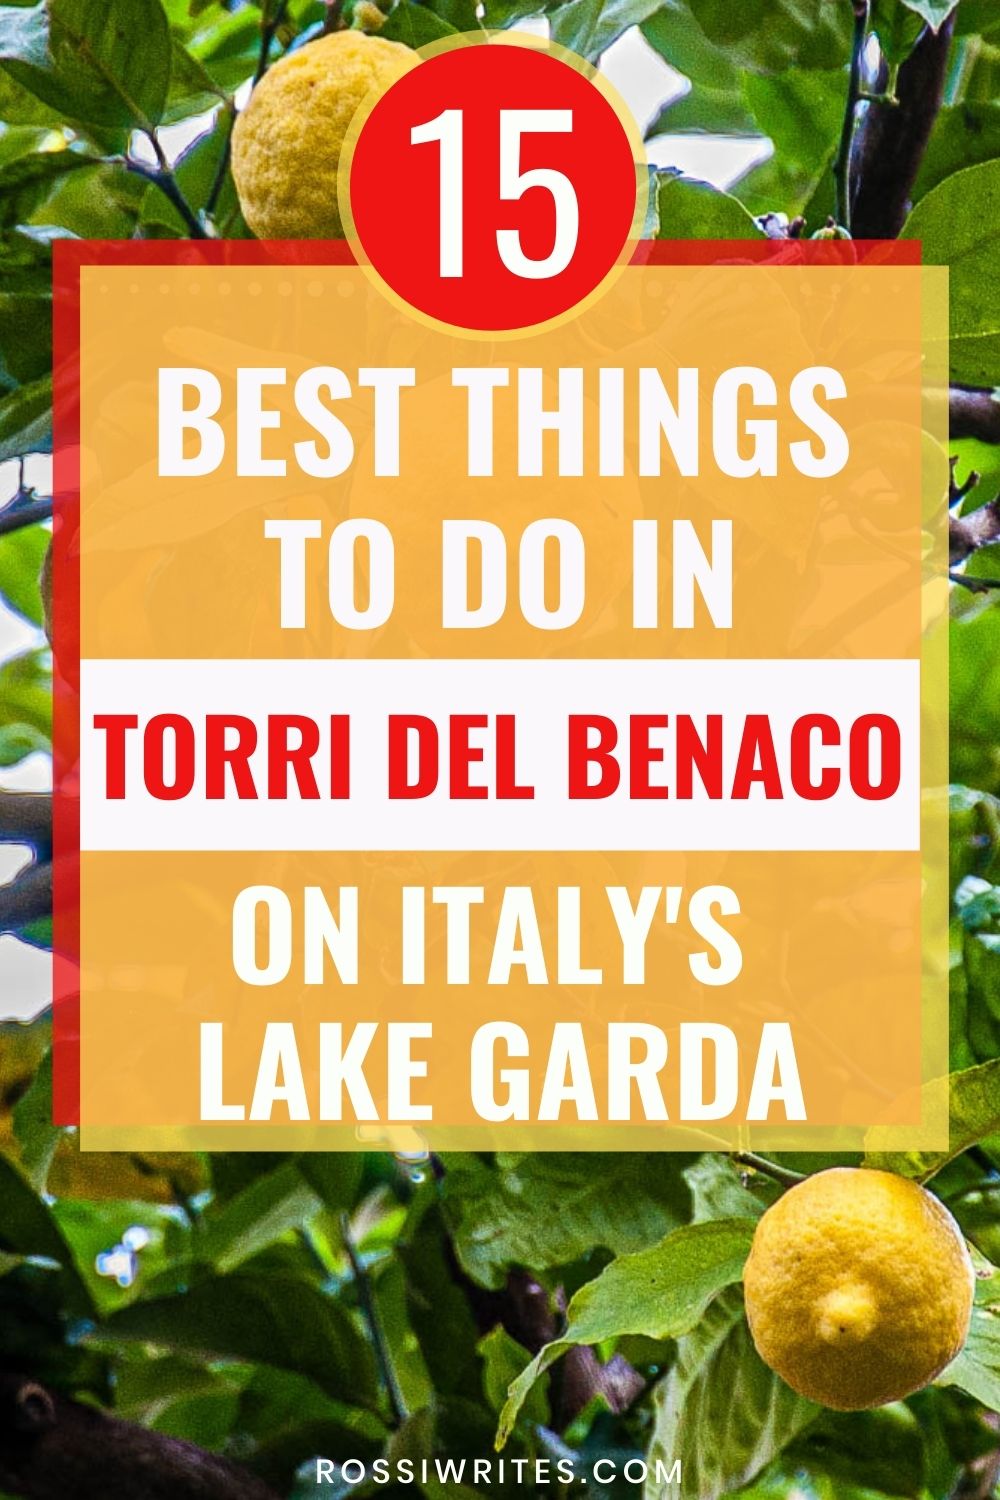 15 Best Things to Do in Torri del Benaco on Italy's Lake Garda - rossiwrites.com